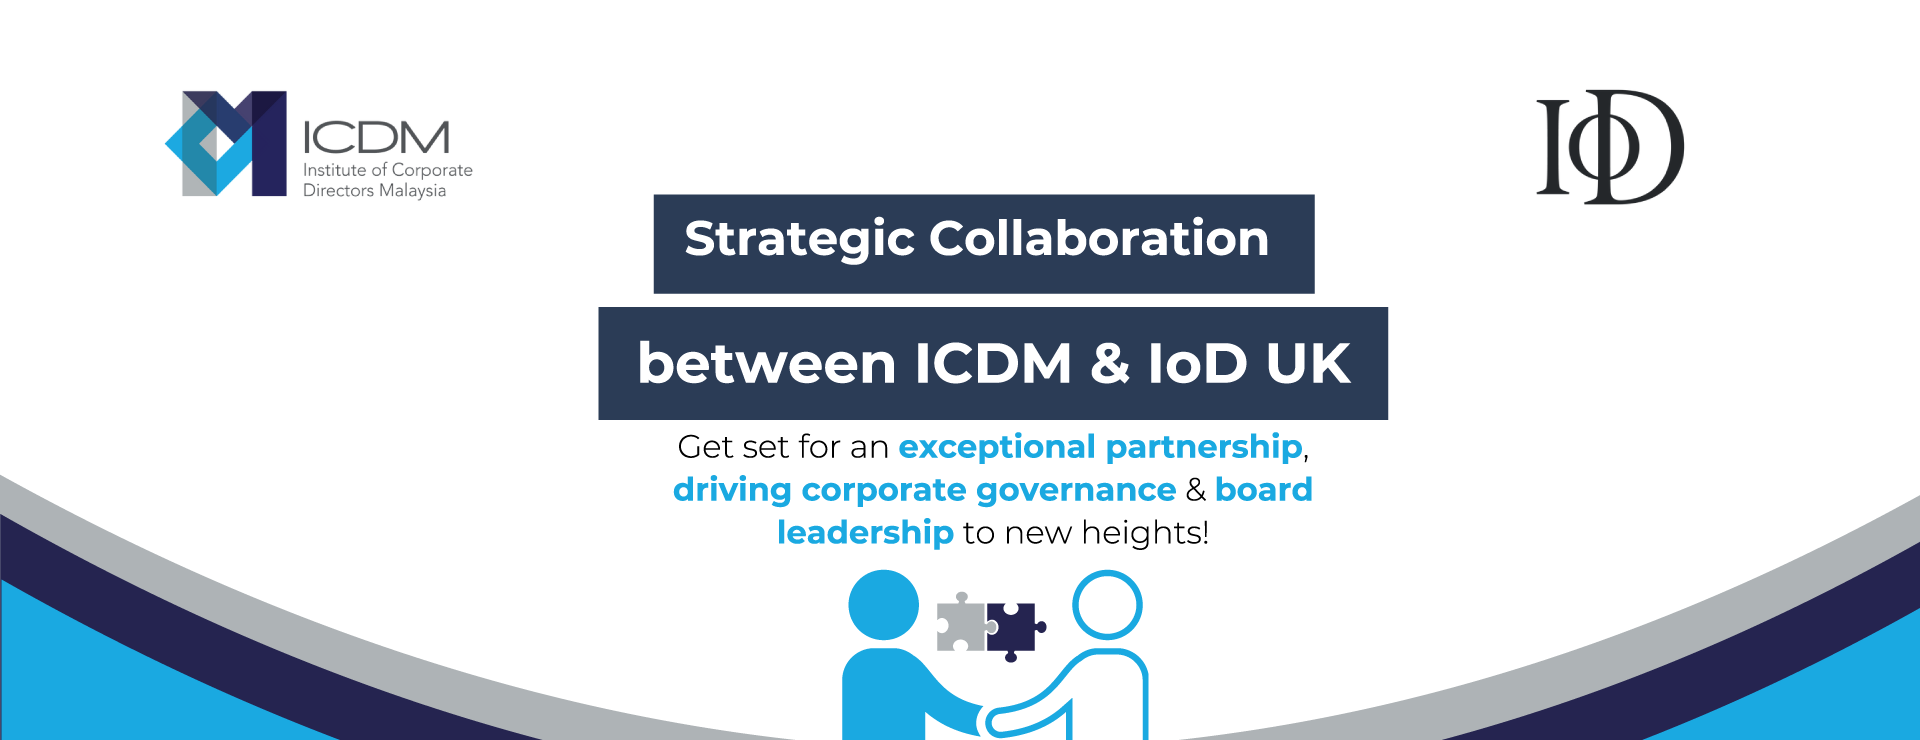 ICDM AND IOD UK COLLABORATION